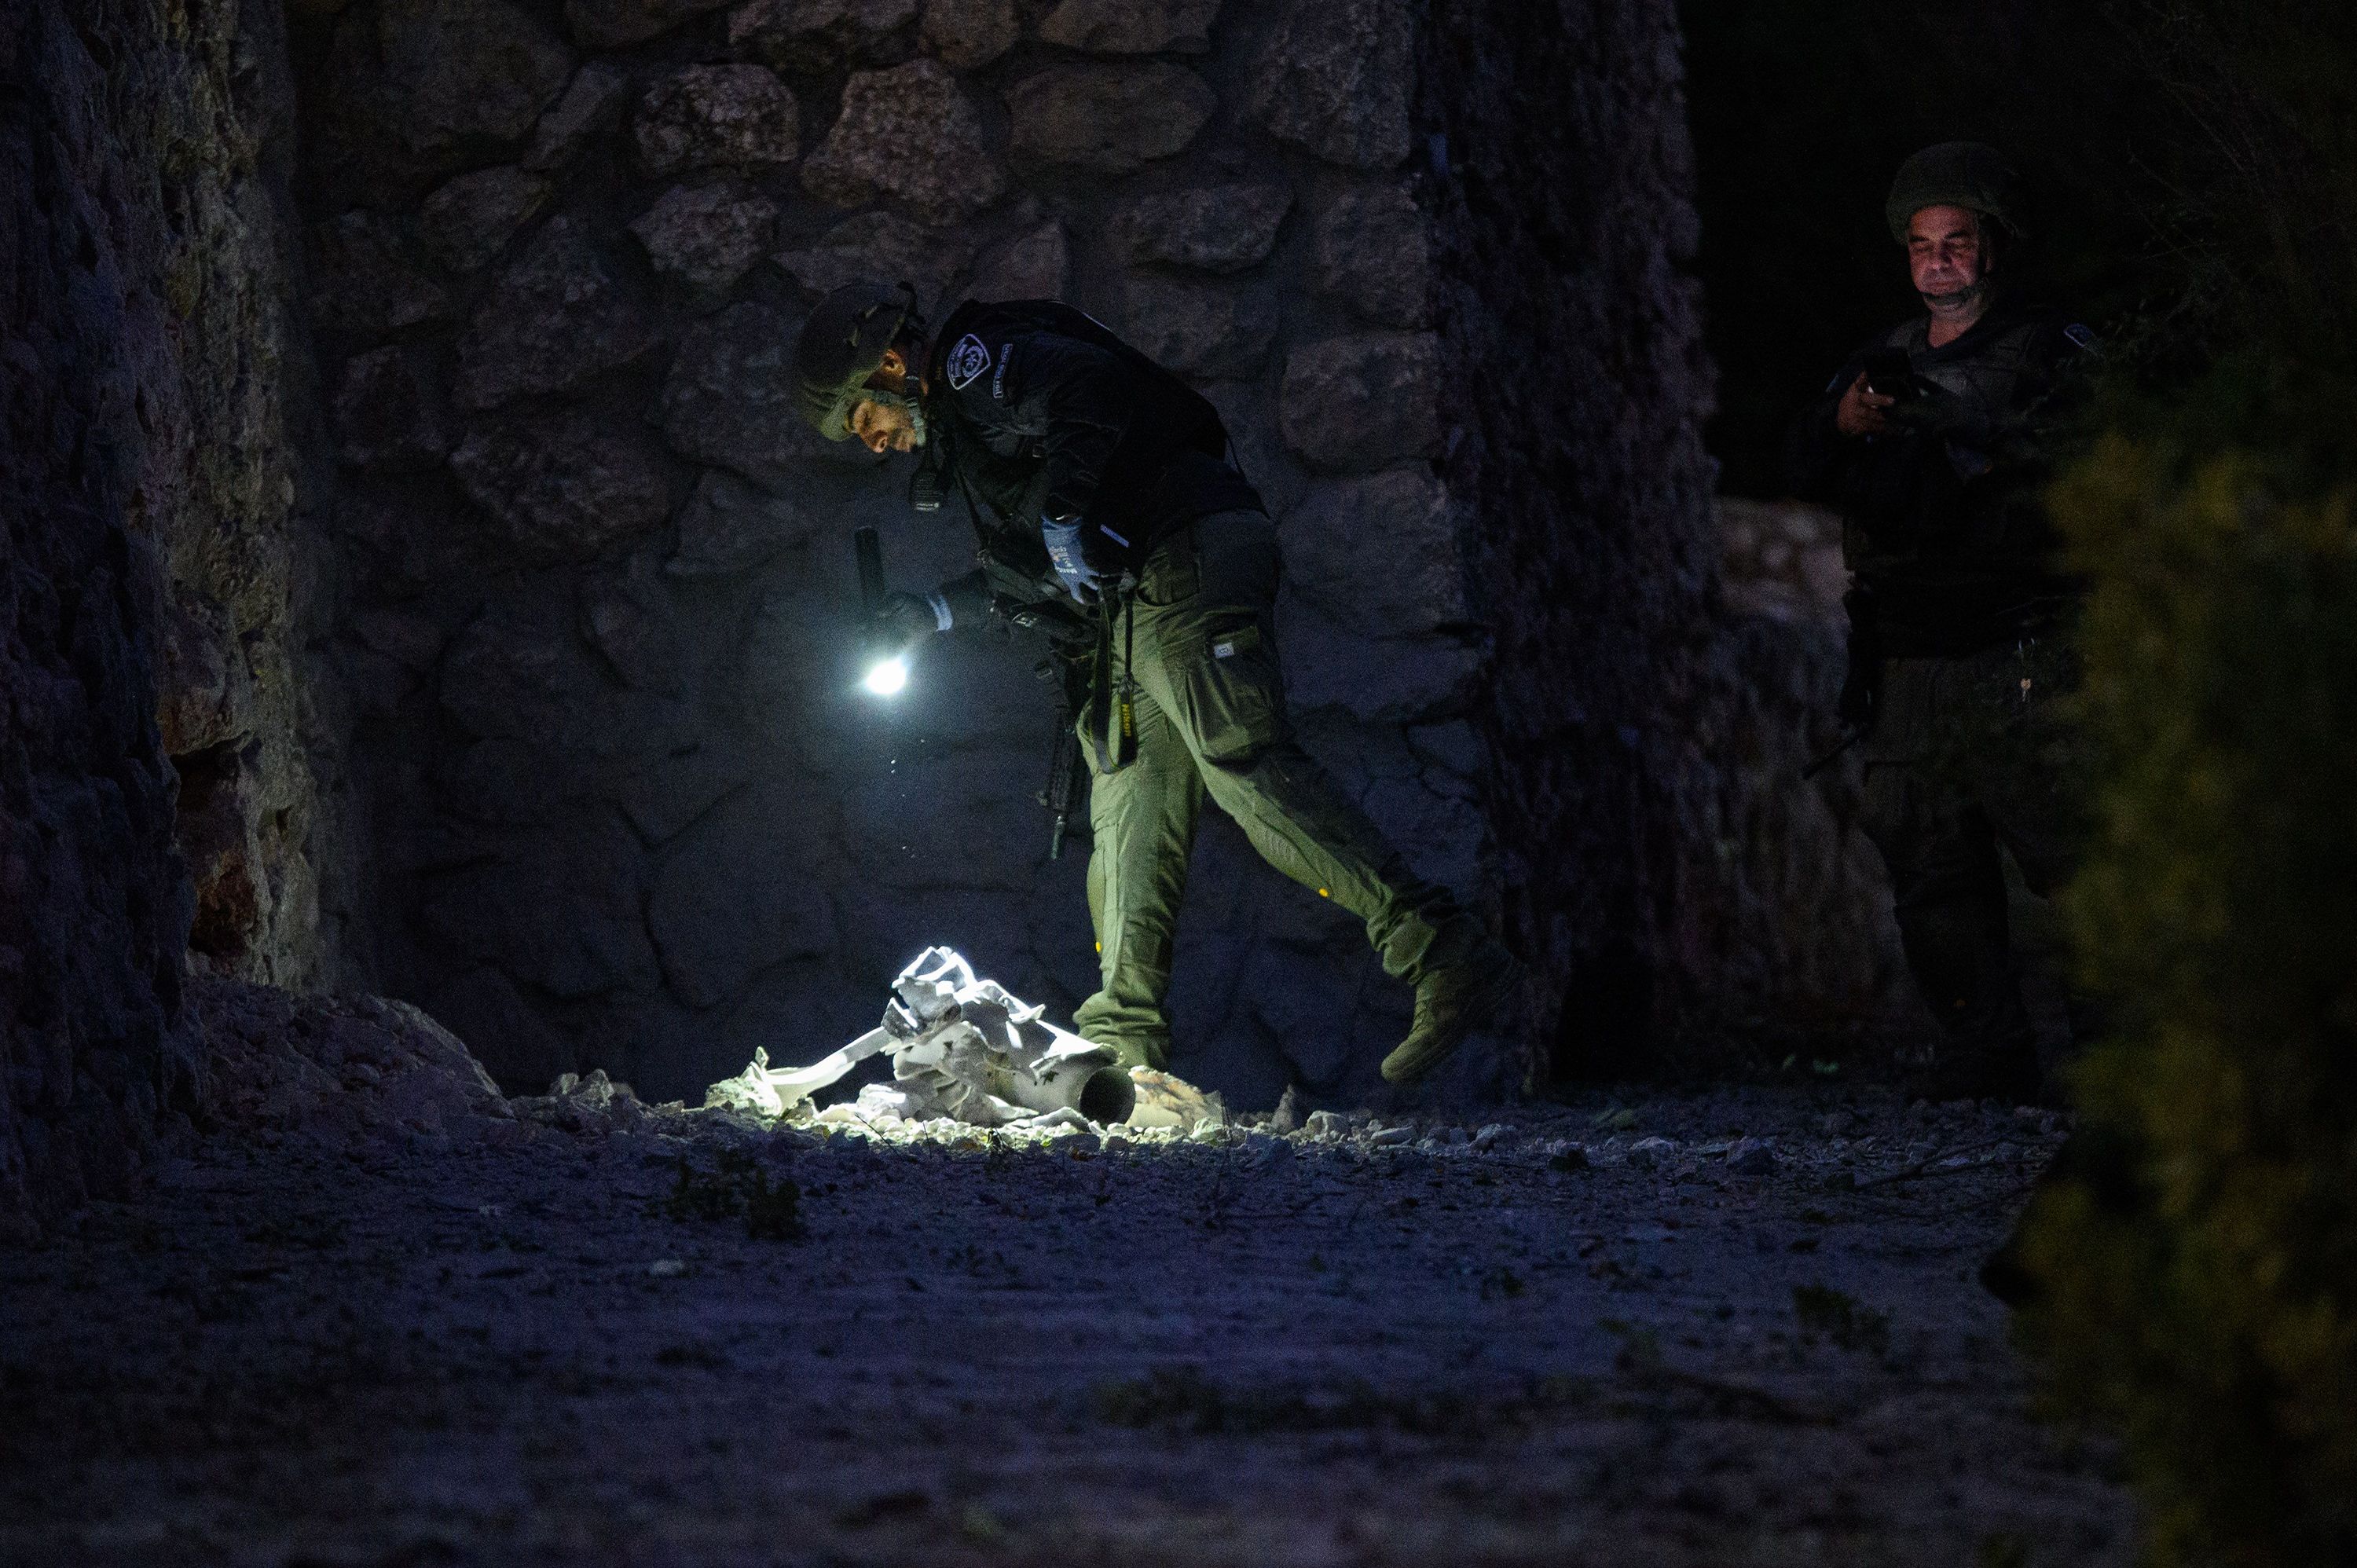 Israeli security inspects debris from a rocket in Kiryat Shmona, Israel, on October 18.